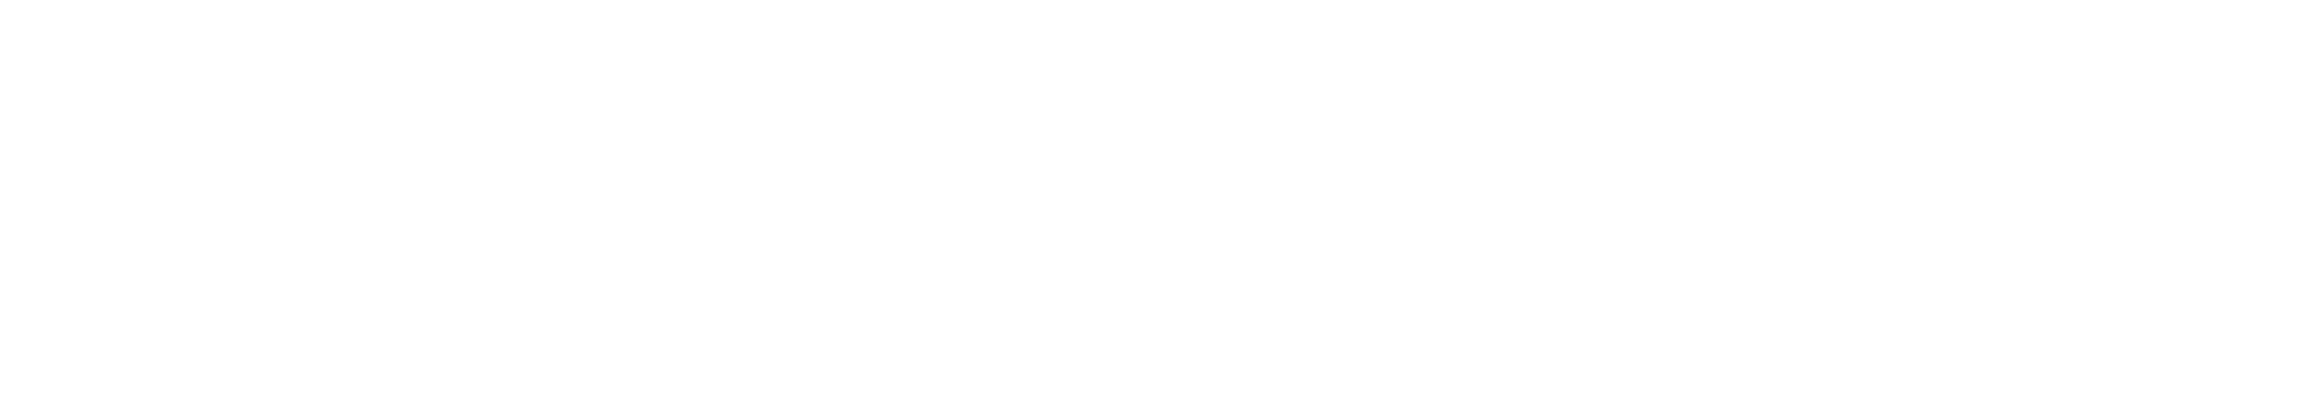 Harbor Group Management logo for Colter Park